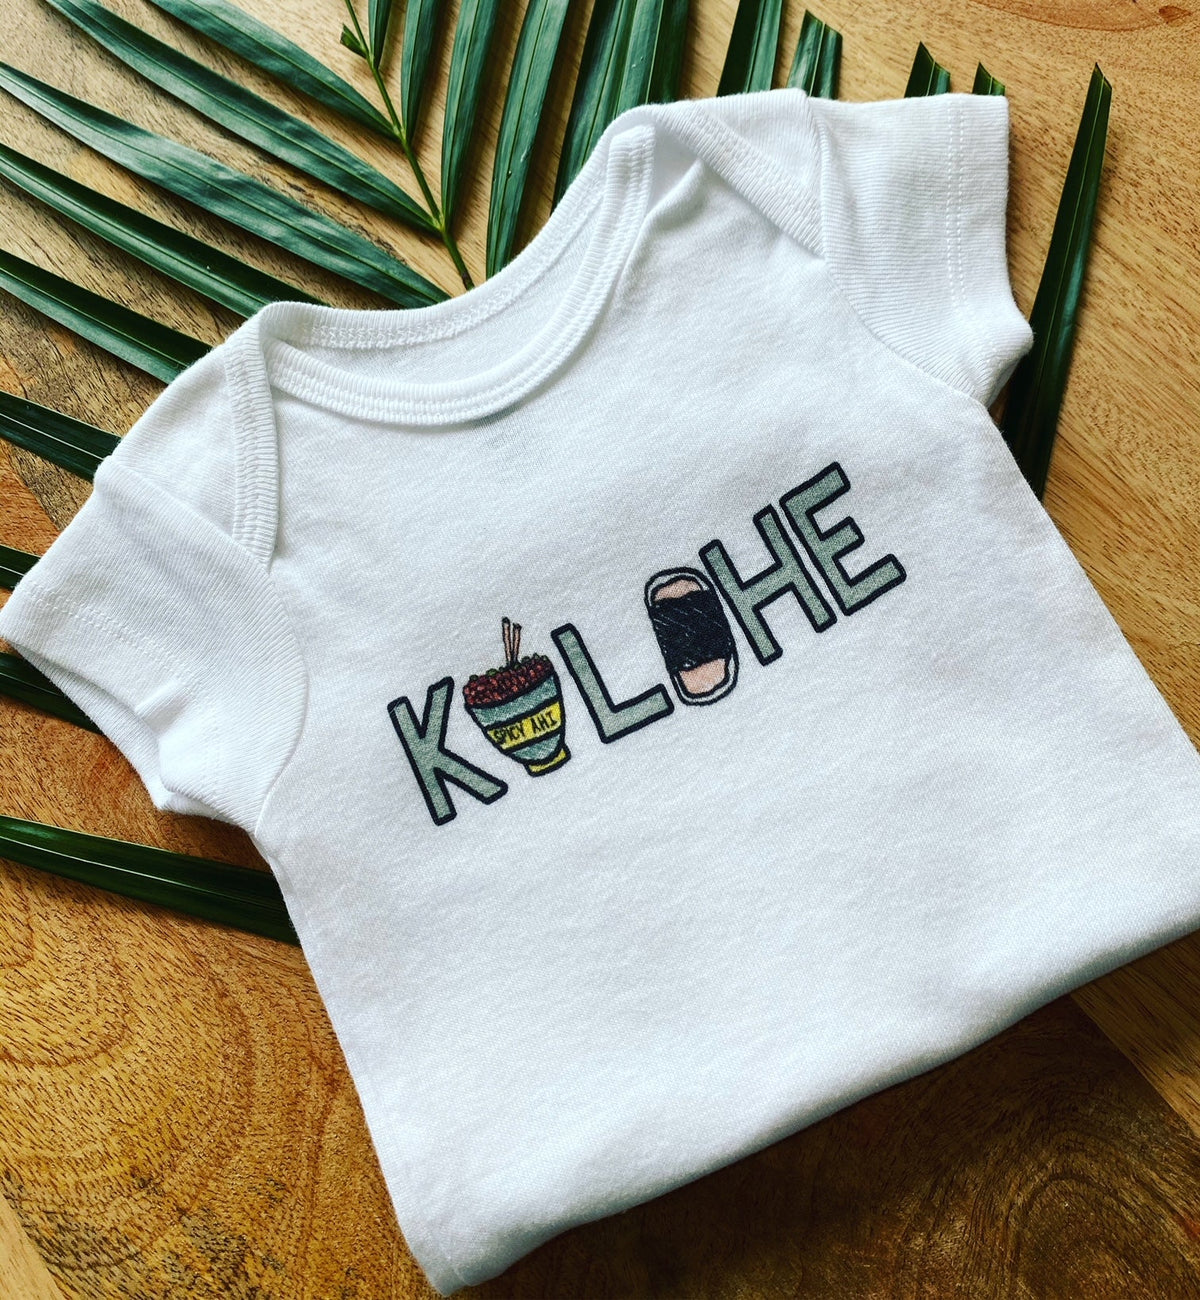 Pop-Up Mākeke - Sal Terrae - Kolohe Short Sleeve Toddler T-Shirt